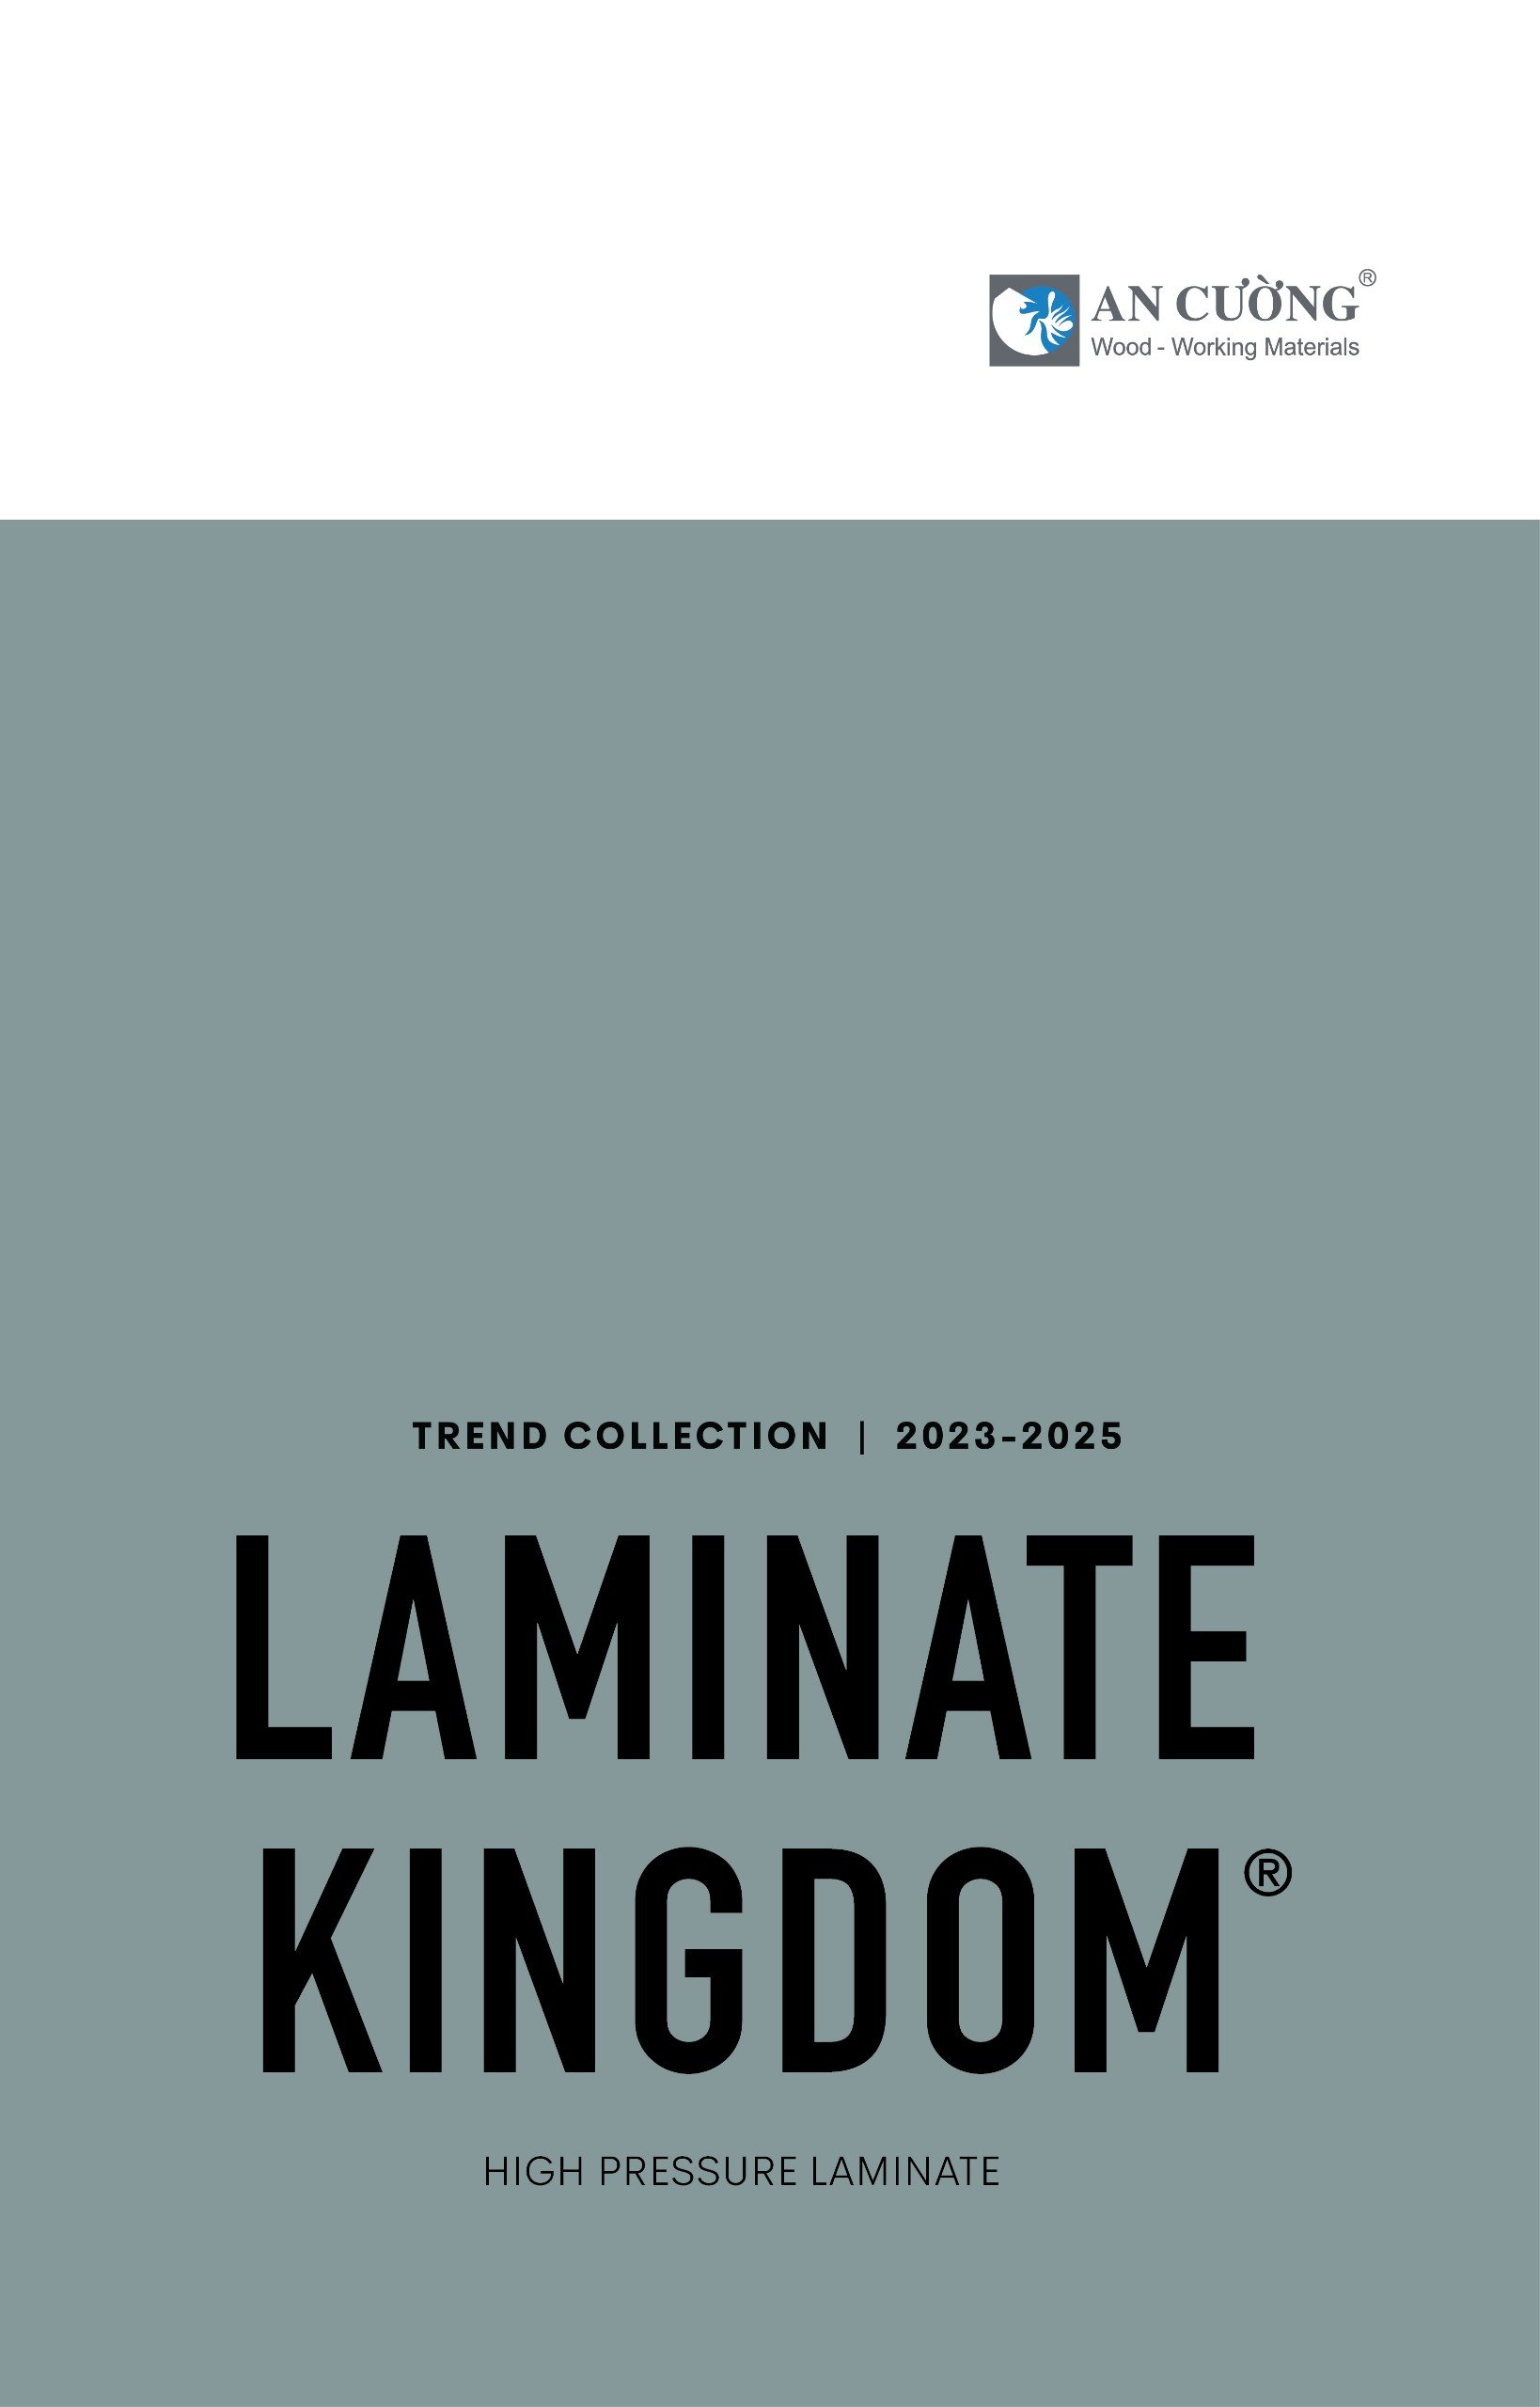 LAMINATE KINGDOM - TREND COLLECTION